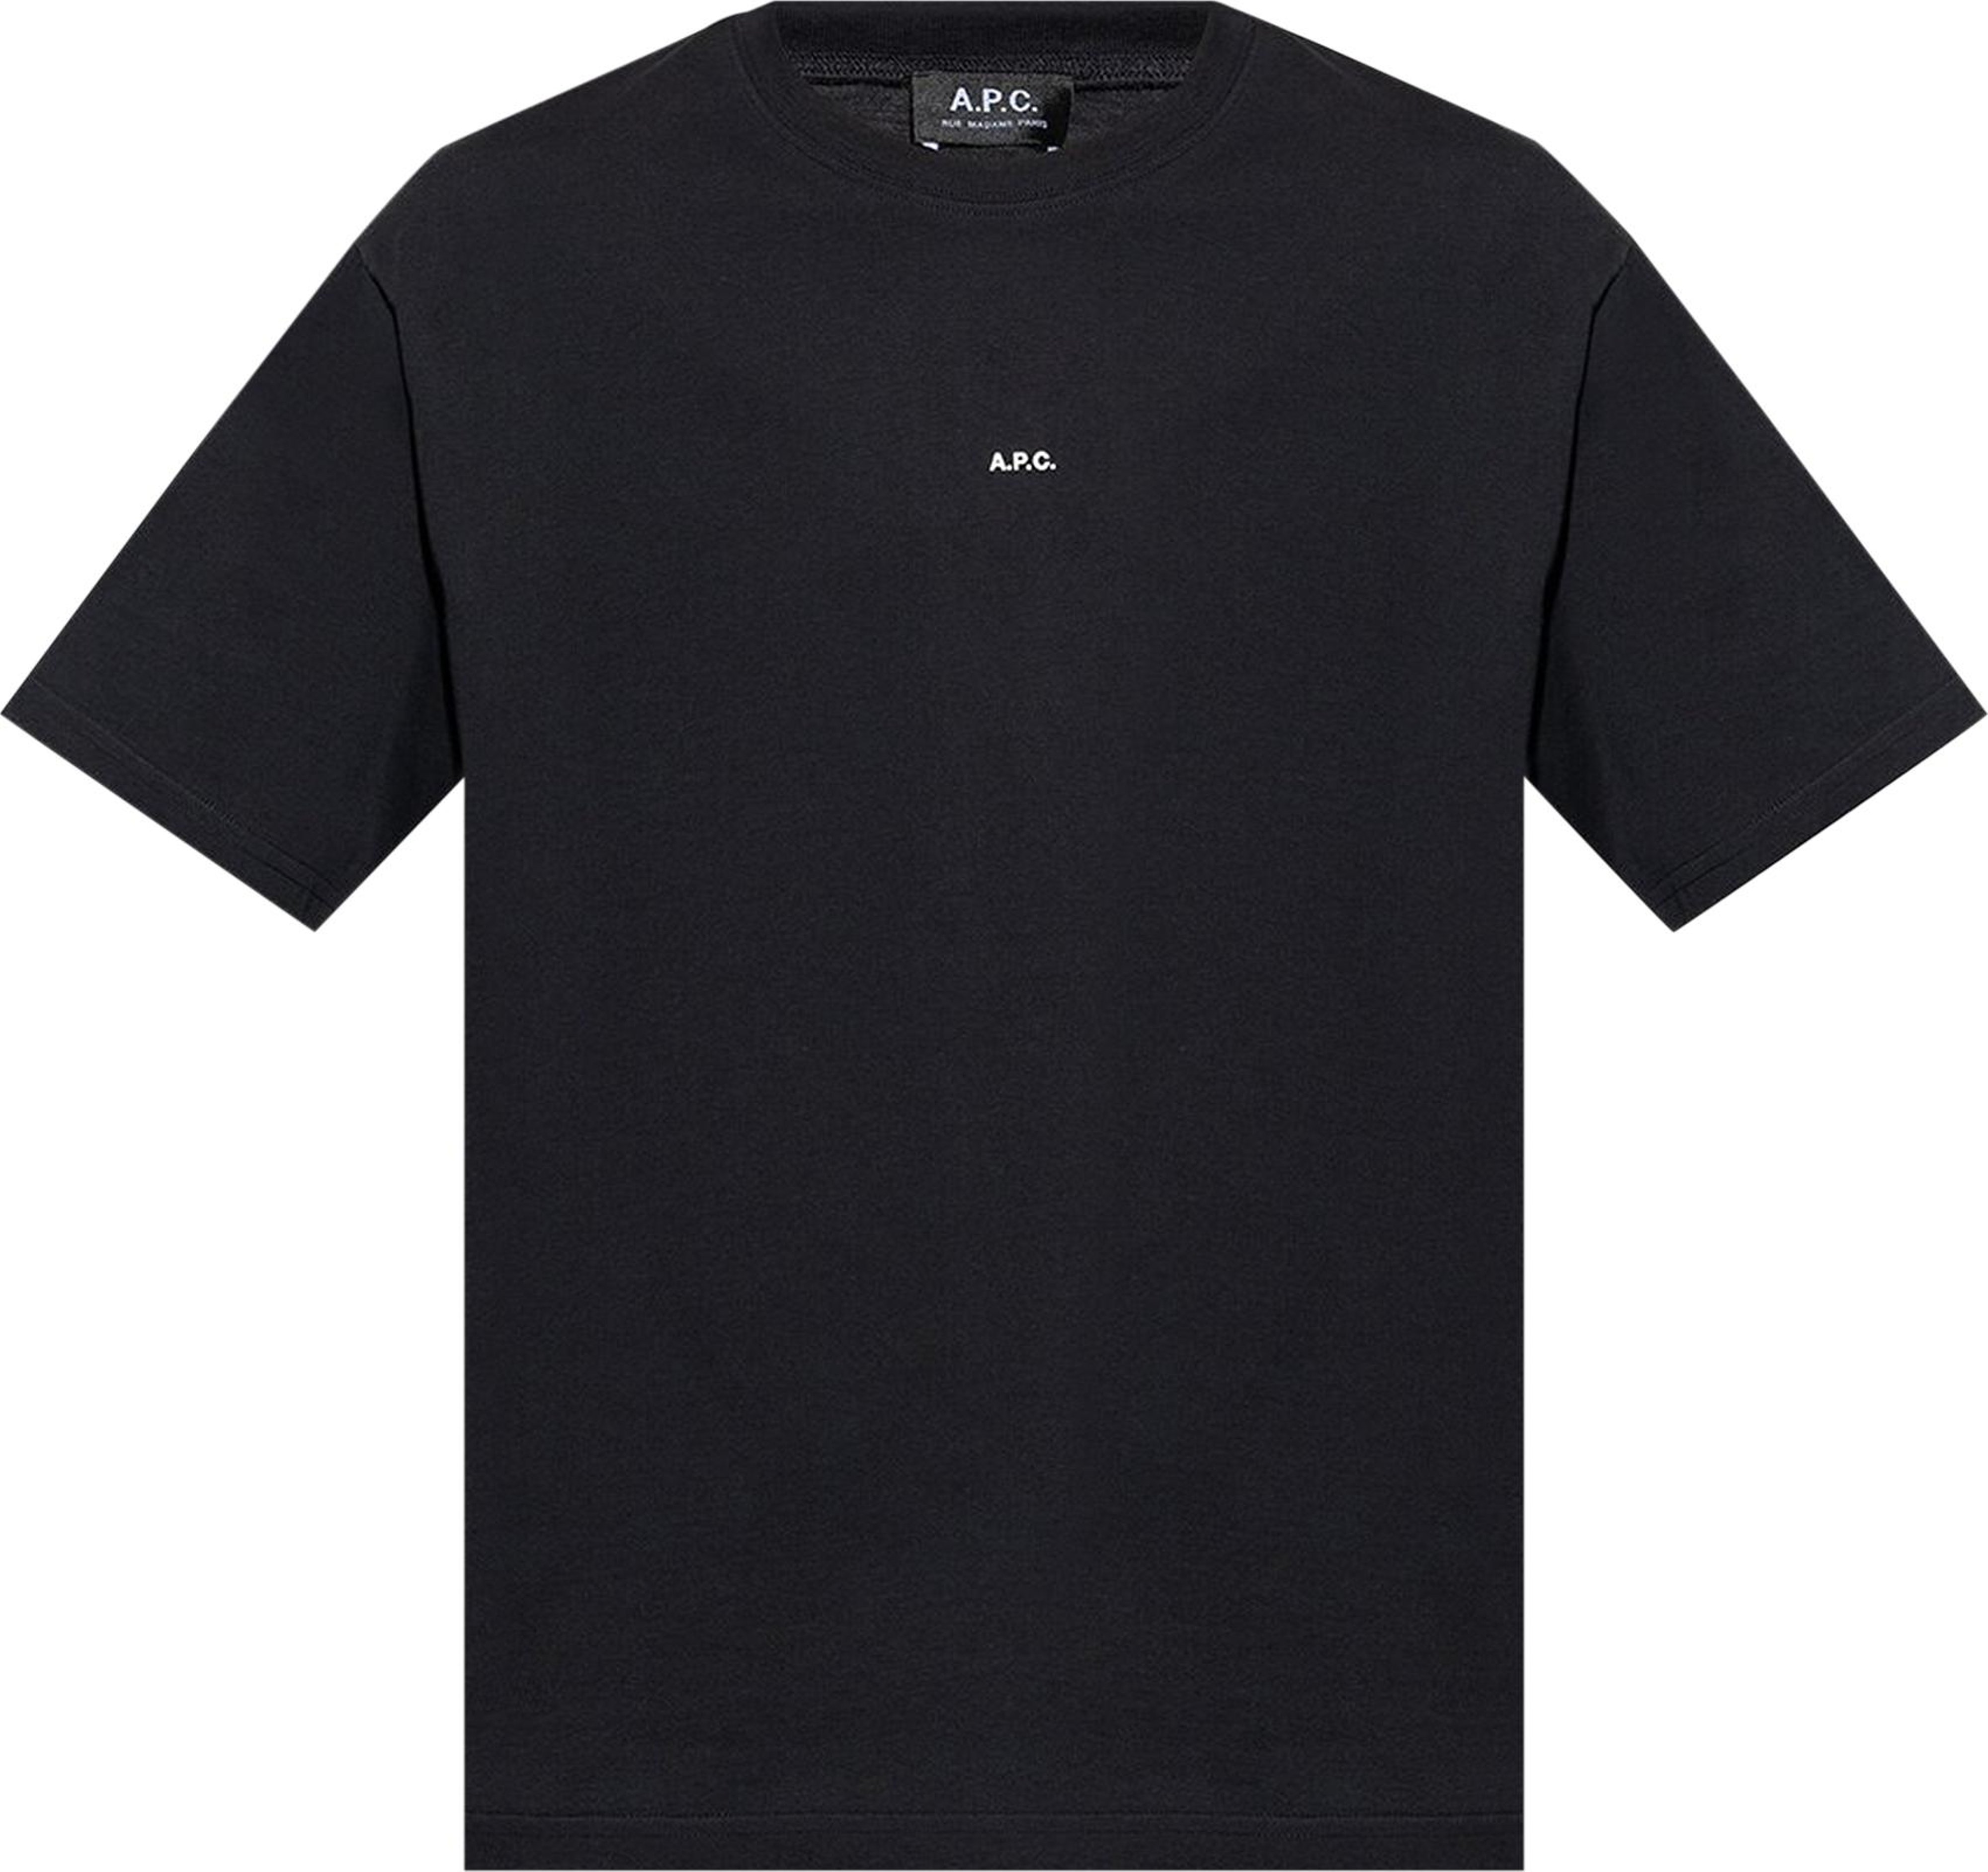 Buy A.P.C. Kyle T-Shirt 'Black' - COEIO H26929 LZZ | GOAT